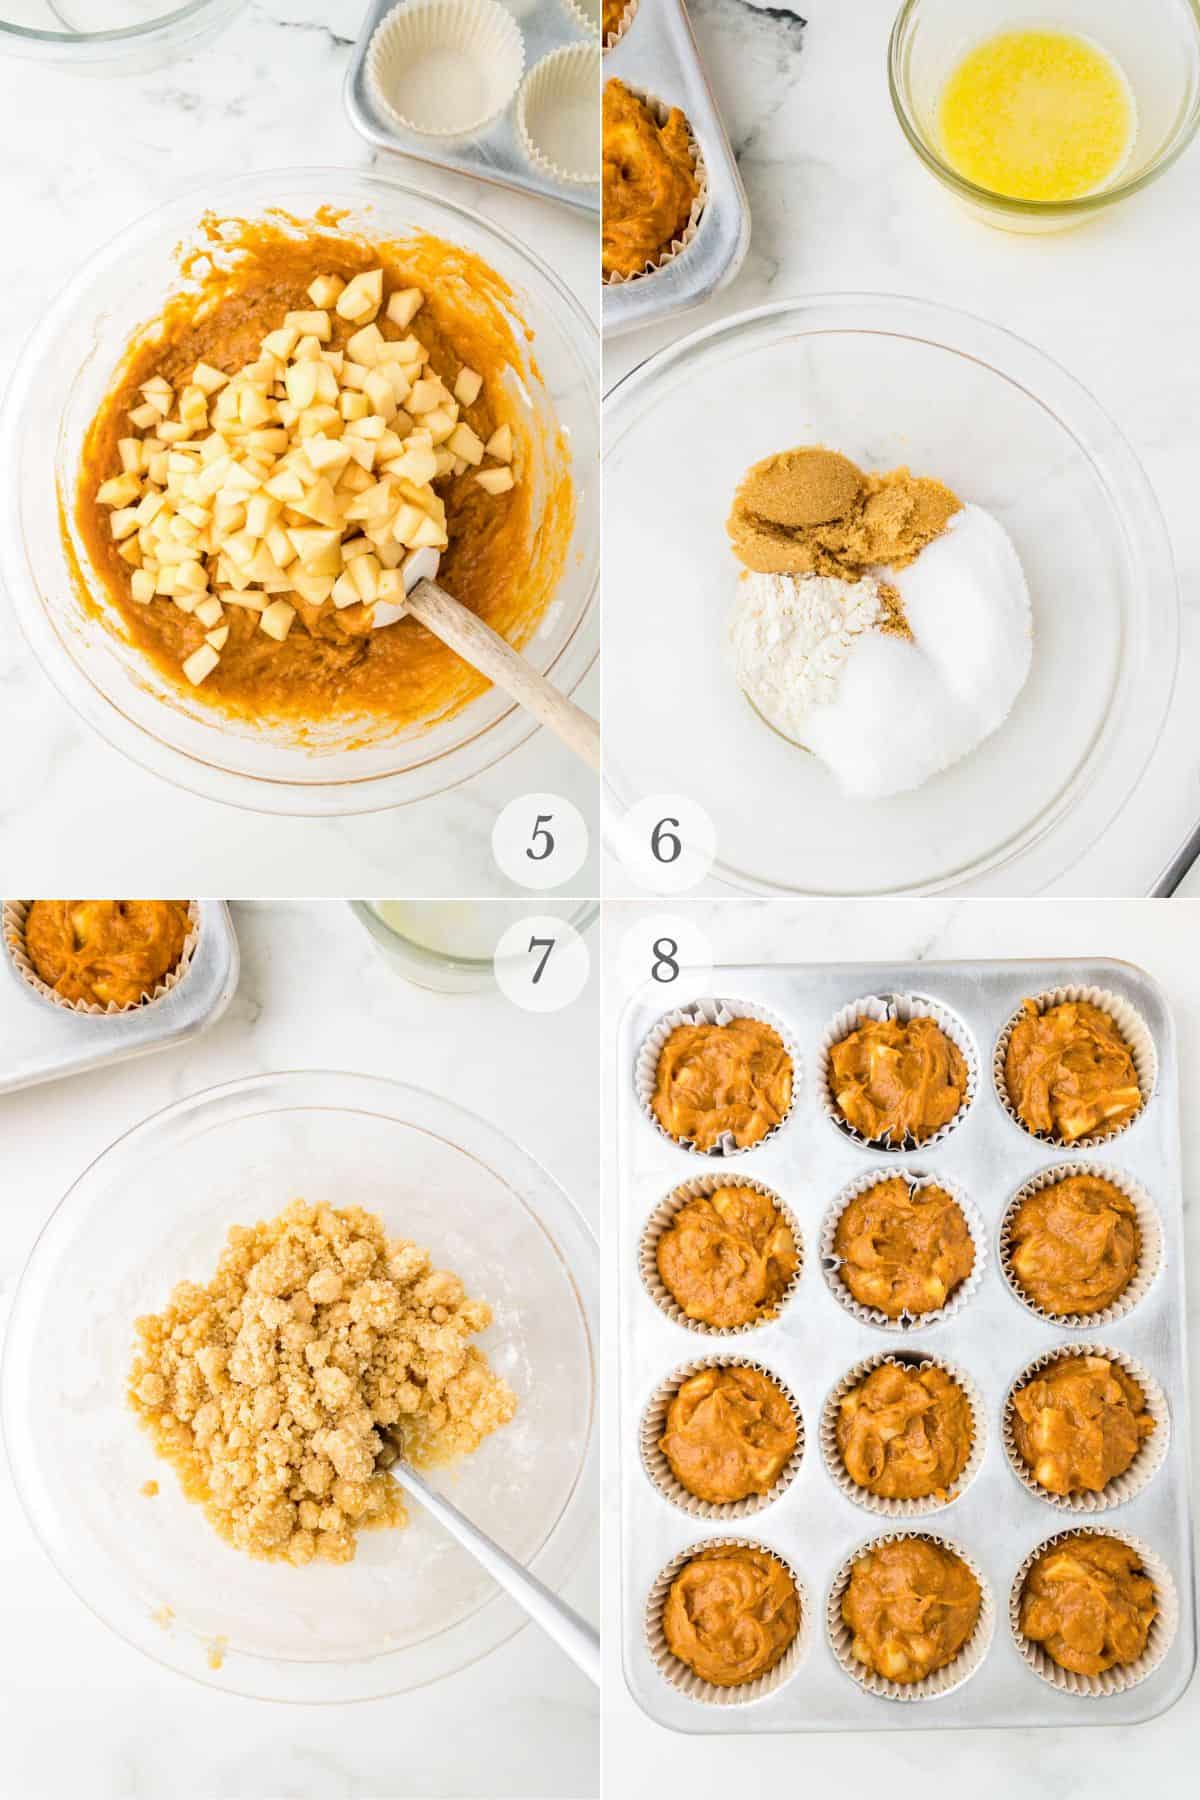 skinny pumpkin apple muffins recipe steps 5-8.